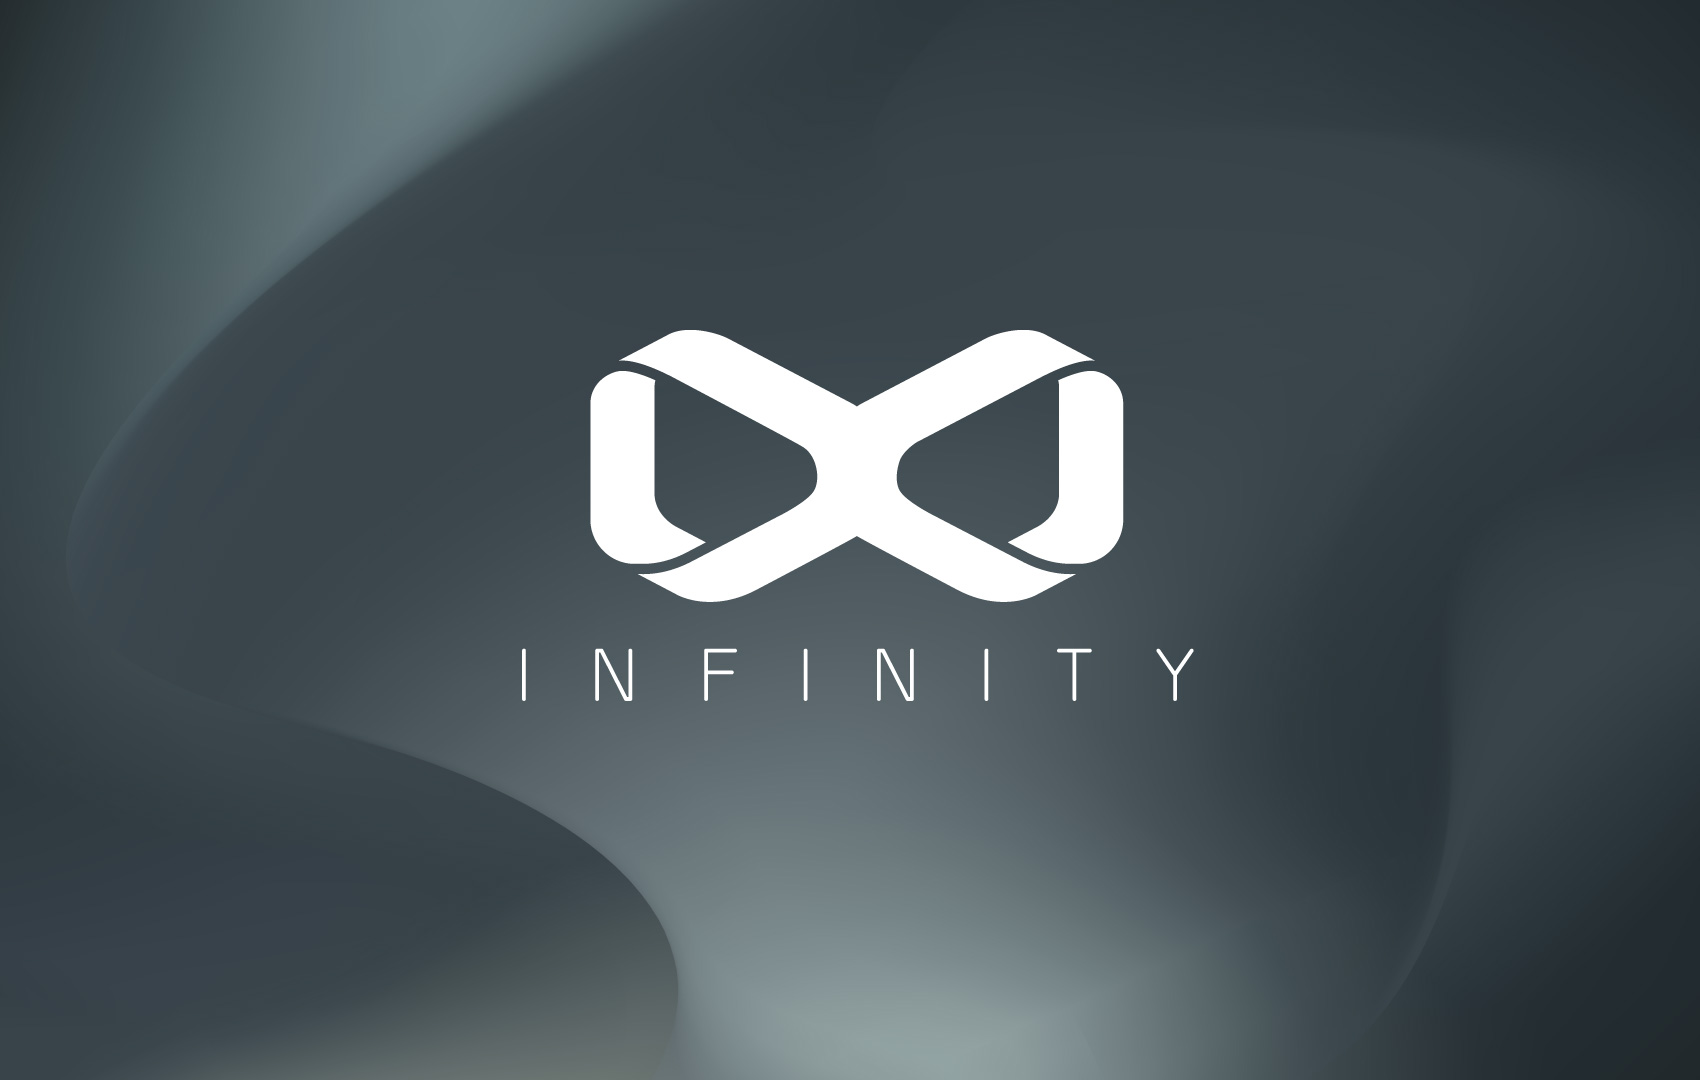 hibriden logotype design for Infinity